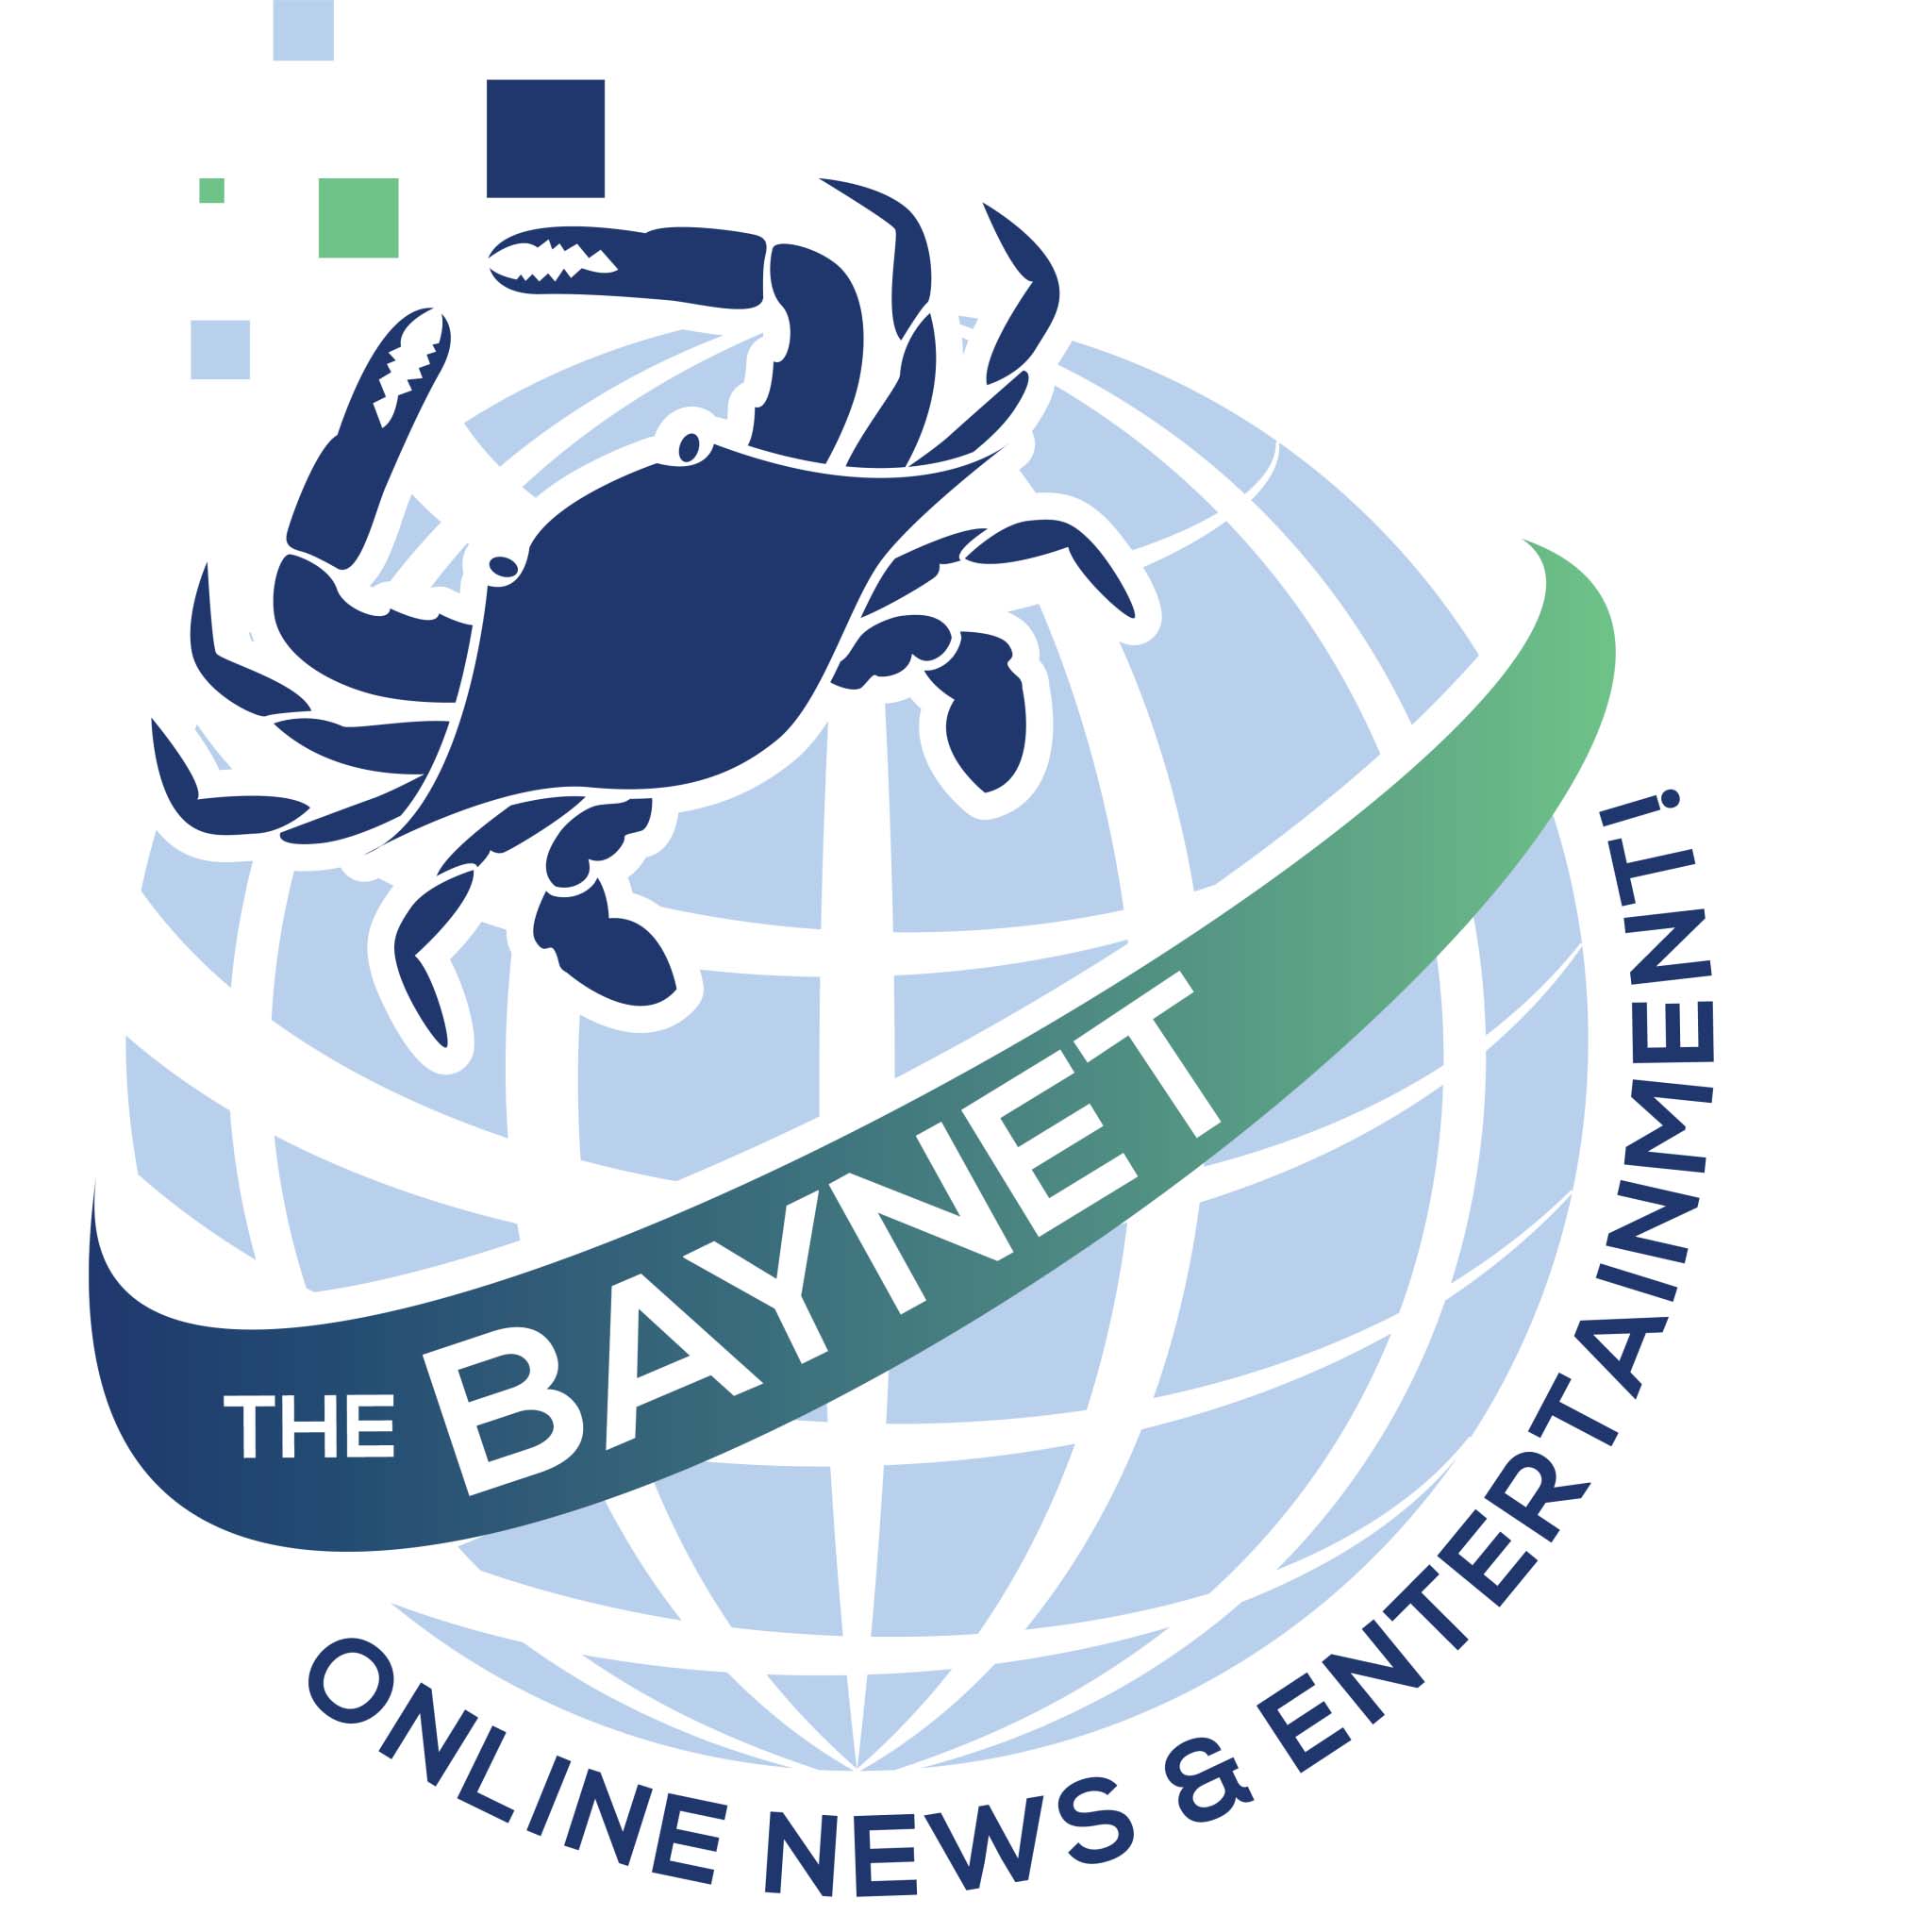 The Baynet